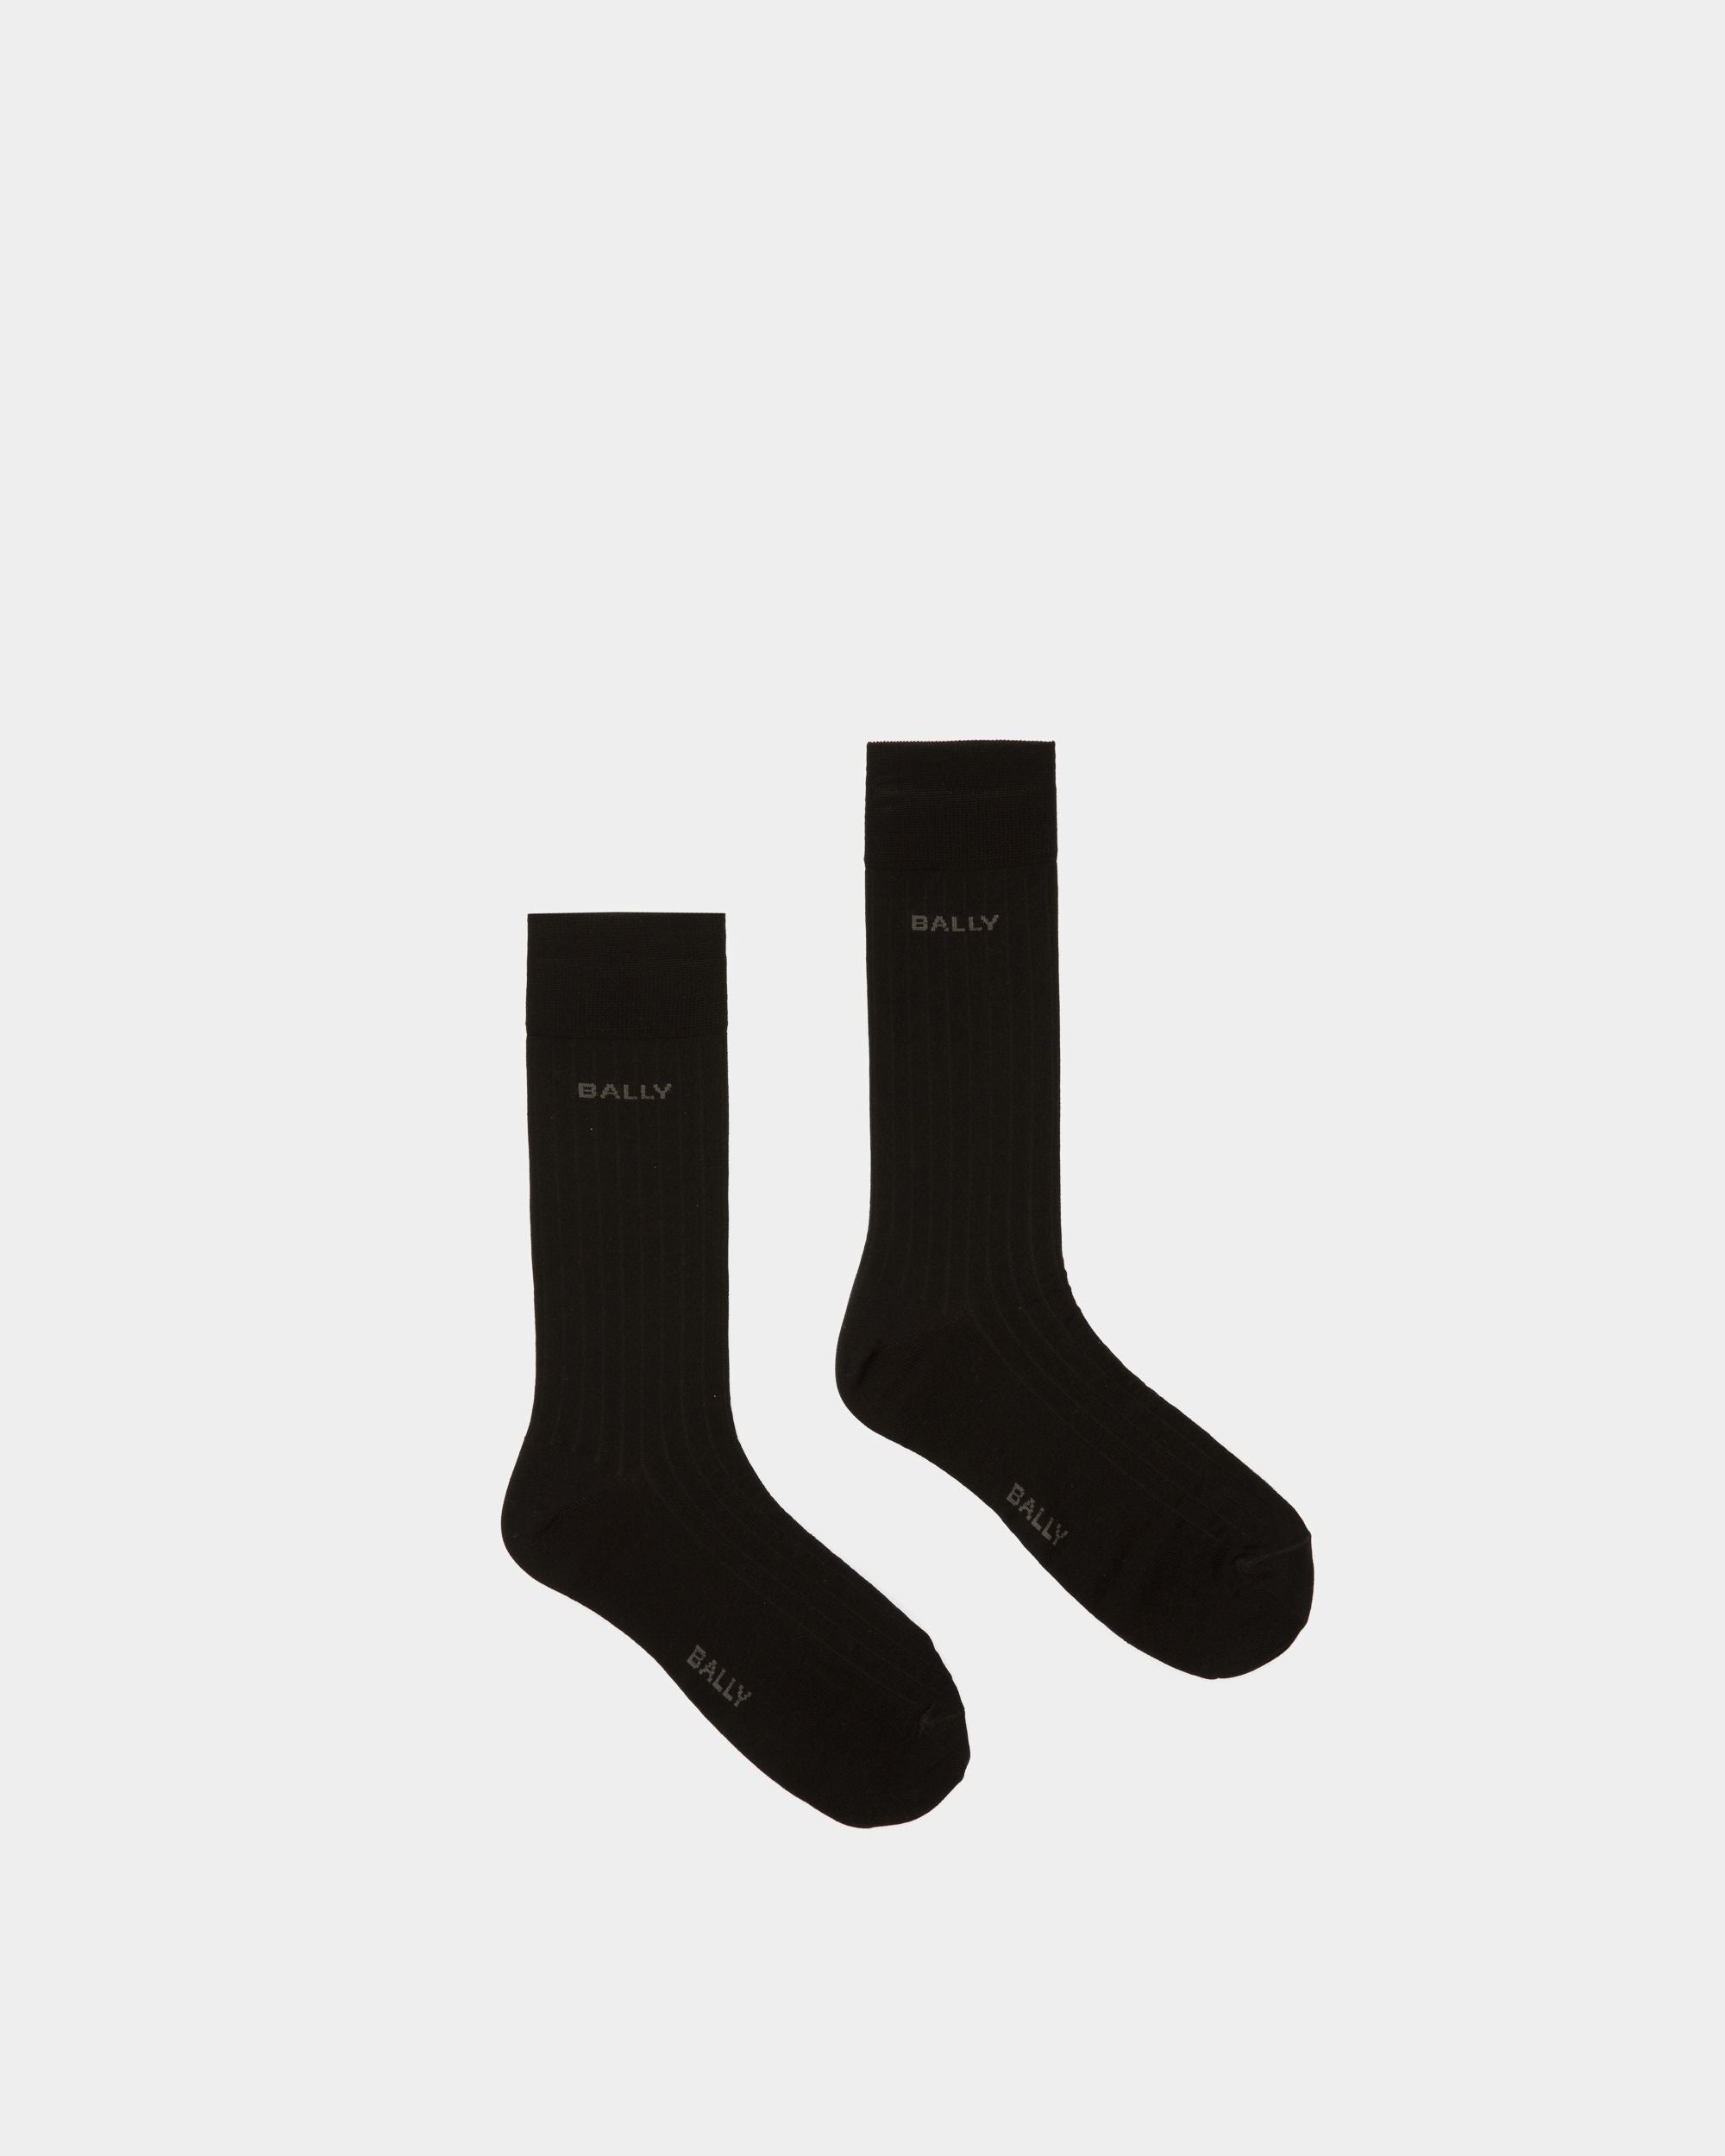 Ribbed Logo Socks | Men's Socks | Black Cotton Blend | Bally | Still Life Top